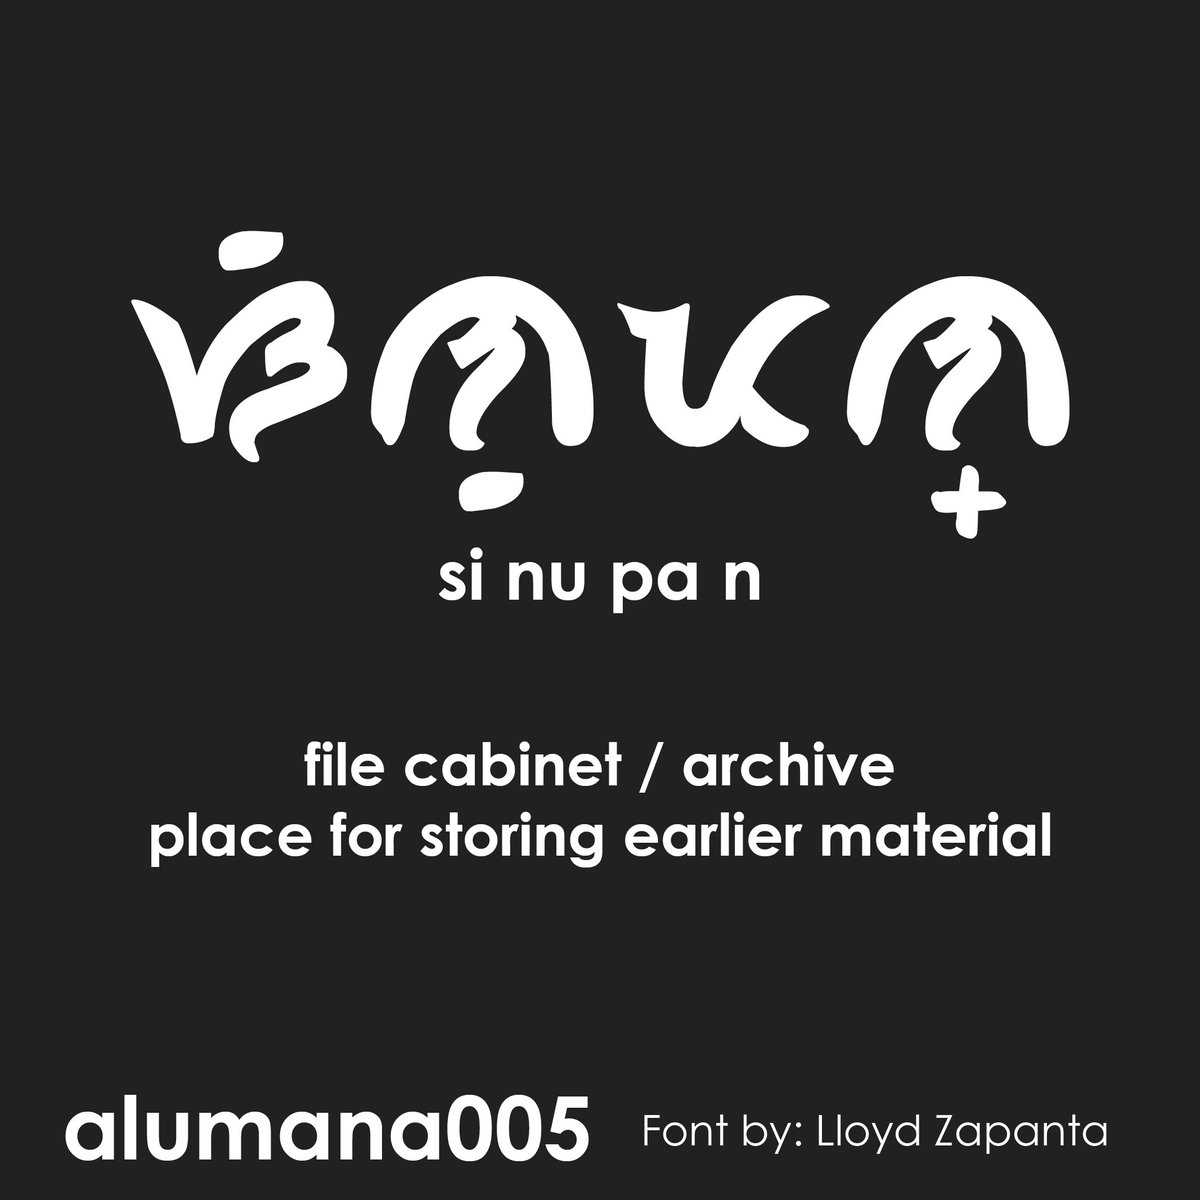 Filipino word 'sinupan'
for file cabinet / archive

#tagalog
#TagalogWord
#tagalogwordoftheday 
#filipino
#alumana005
#sinupan
#archive
#filecabinet